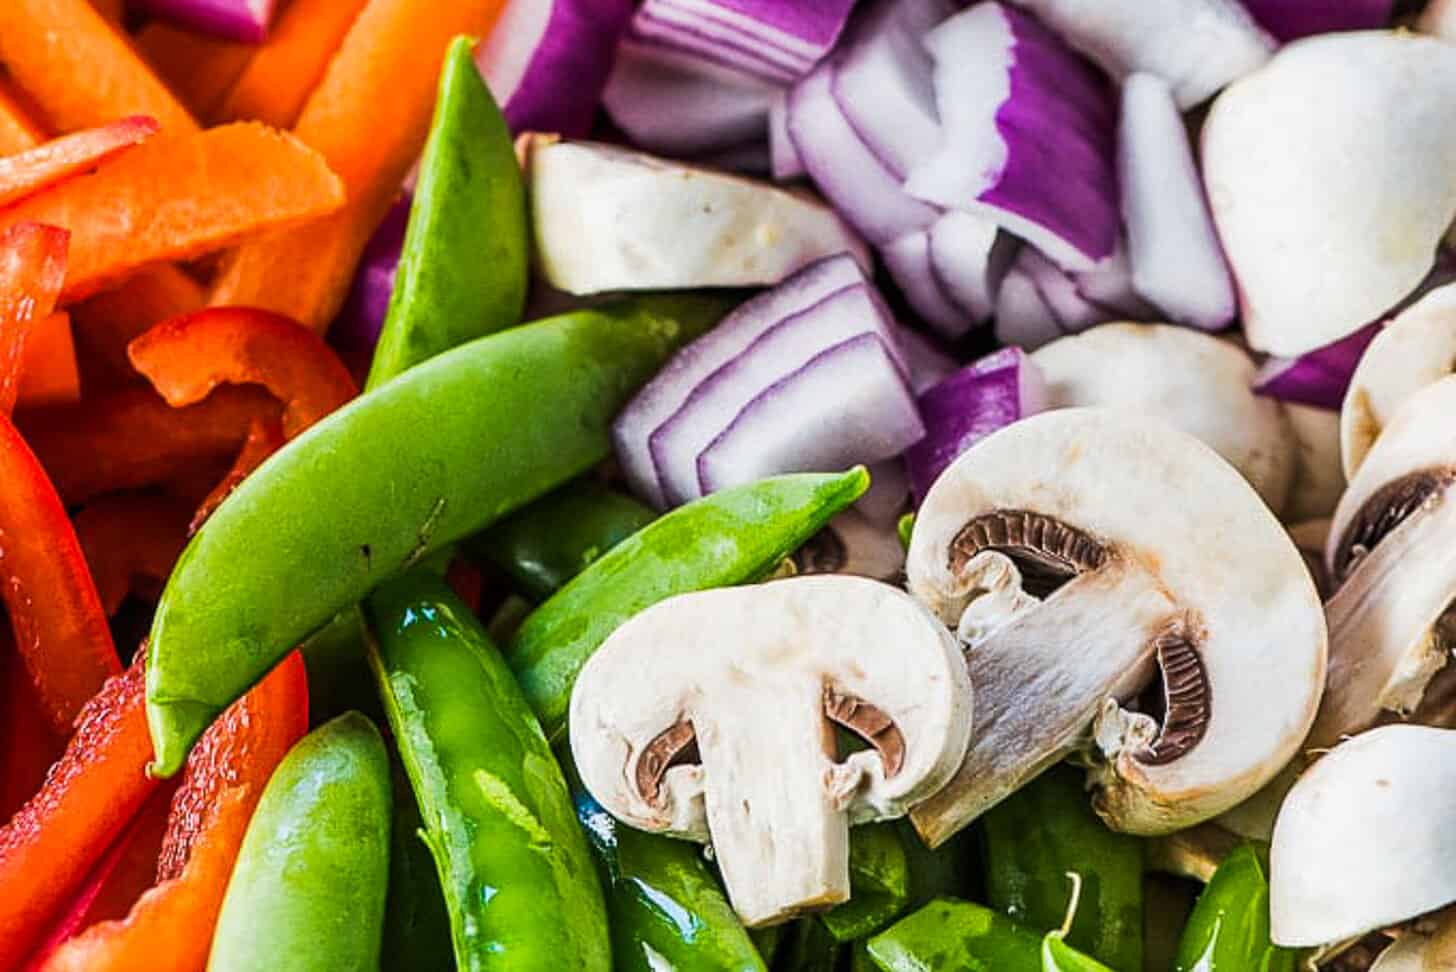 a close up of chopped stir fry veggies